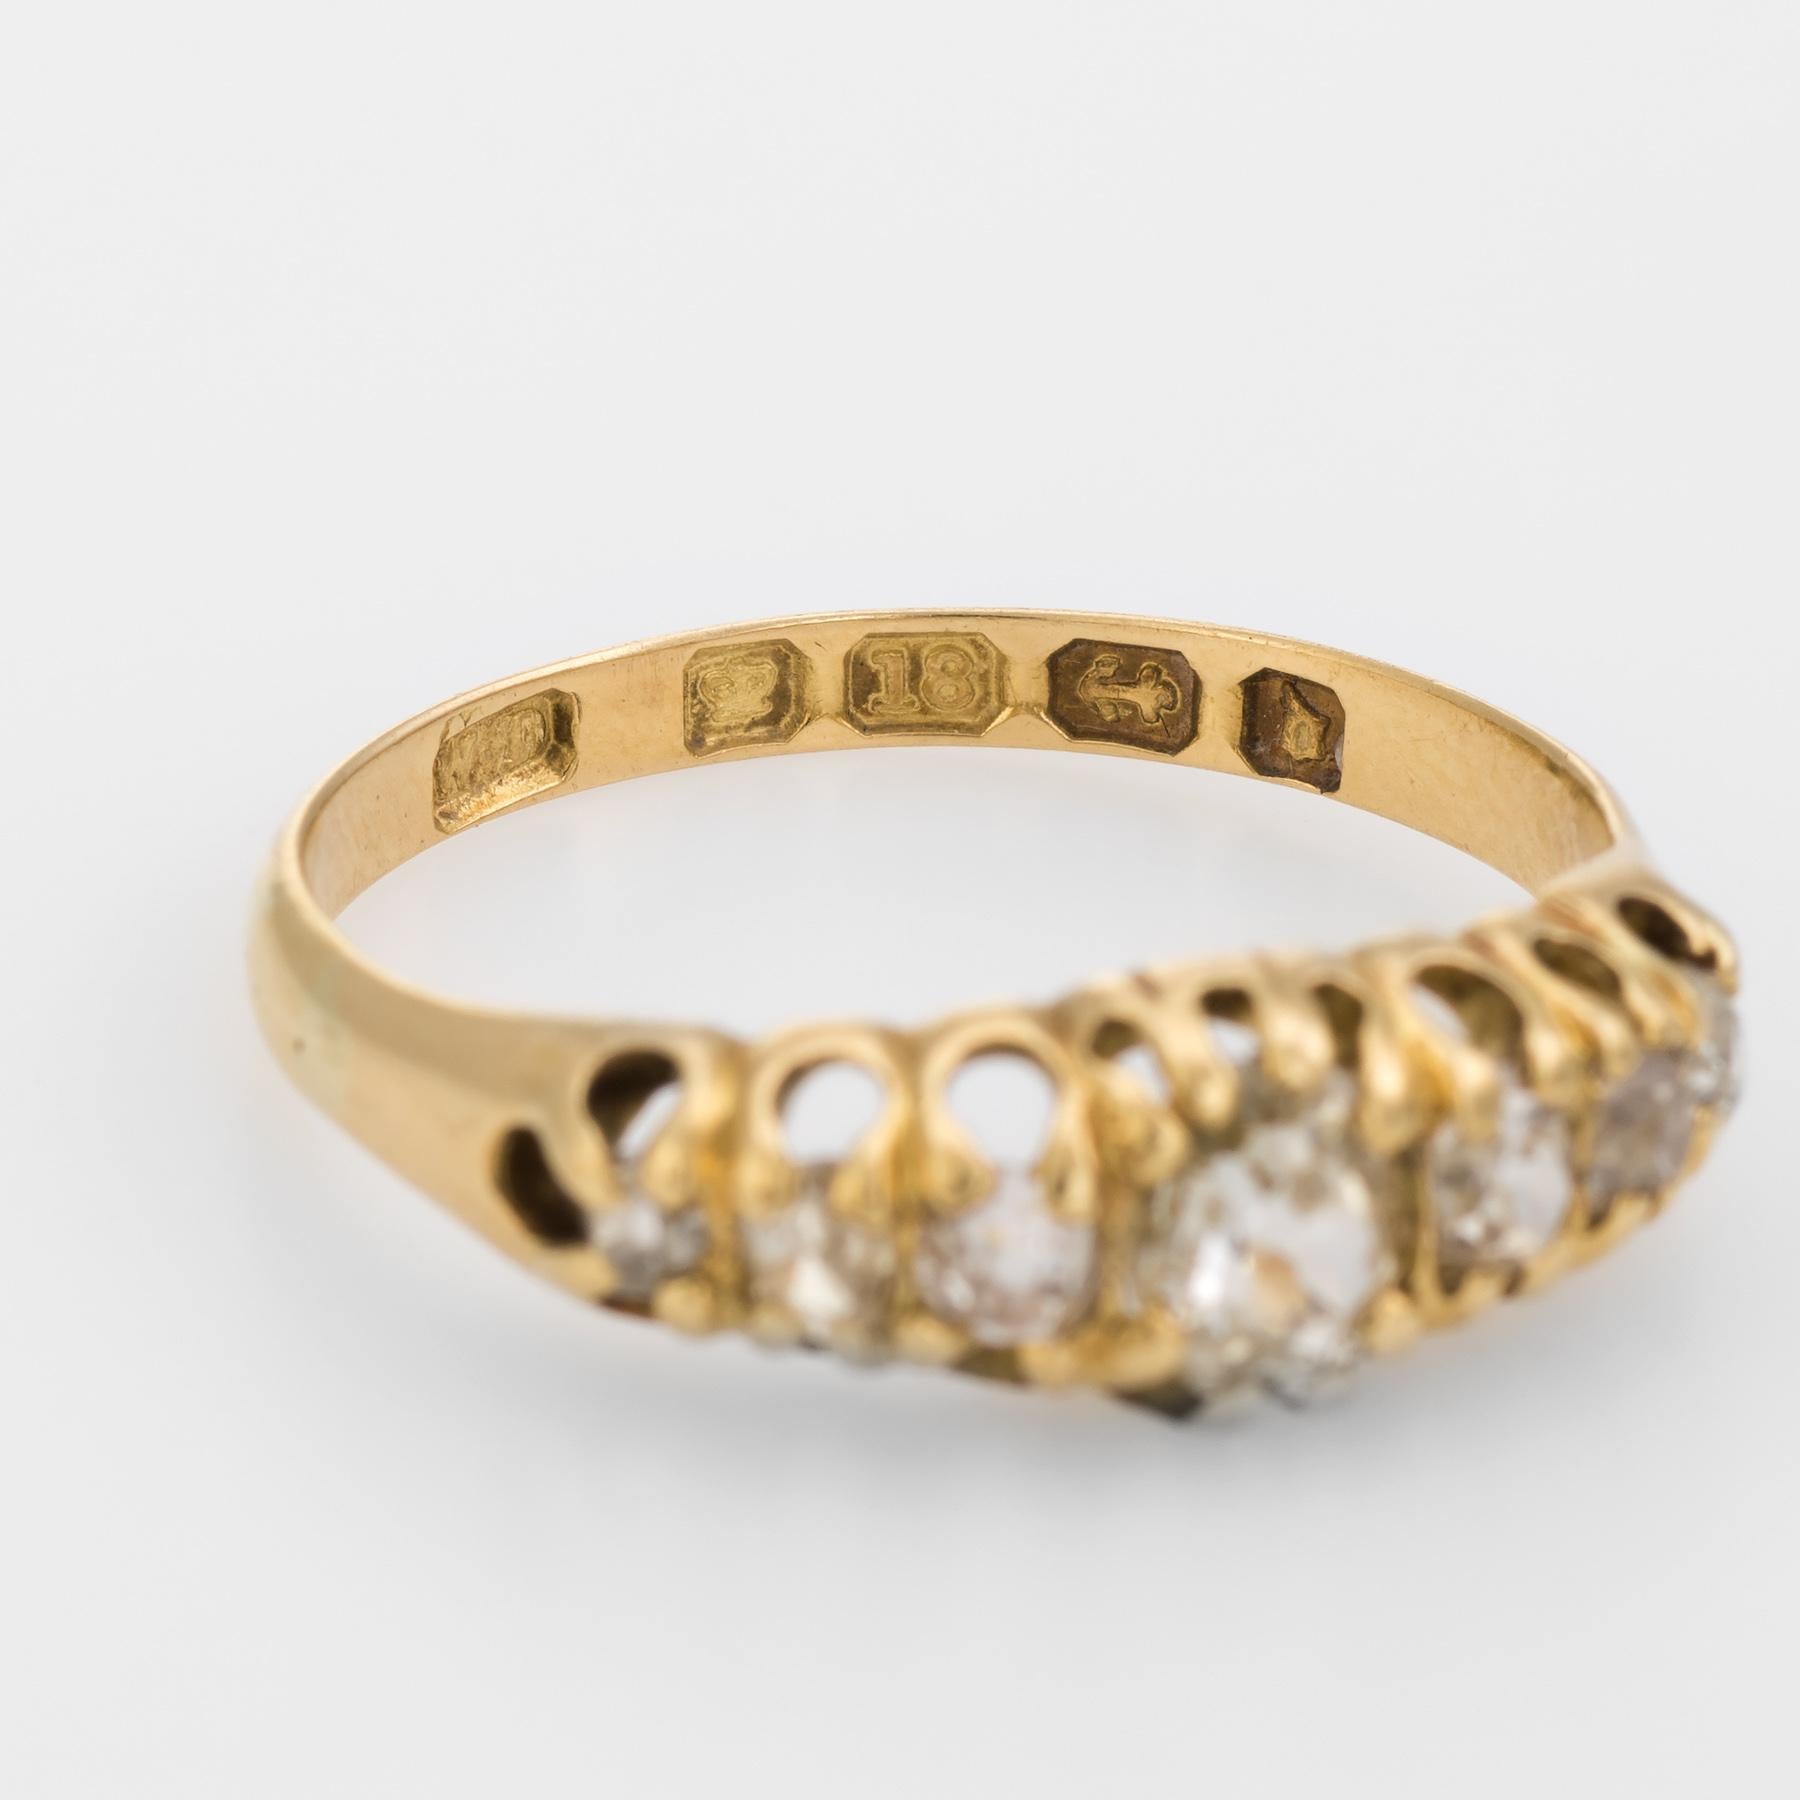 Graduated 7 Old Mine Cut Diamond Ring Antique Victorian circa 1878 18 Karat Gold 2